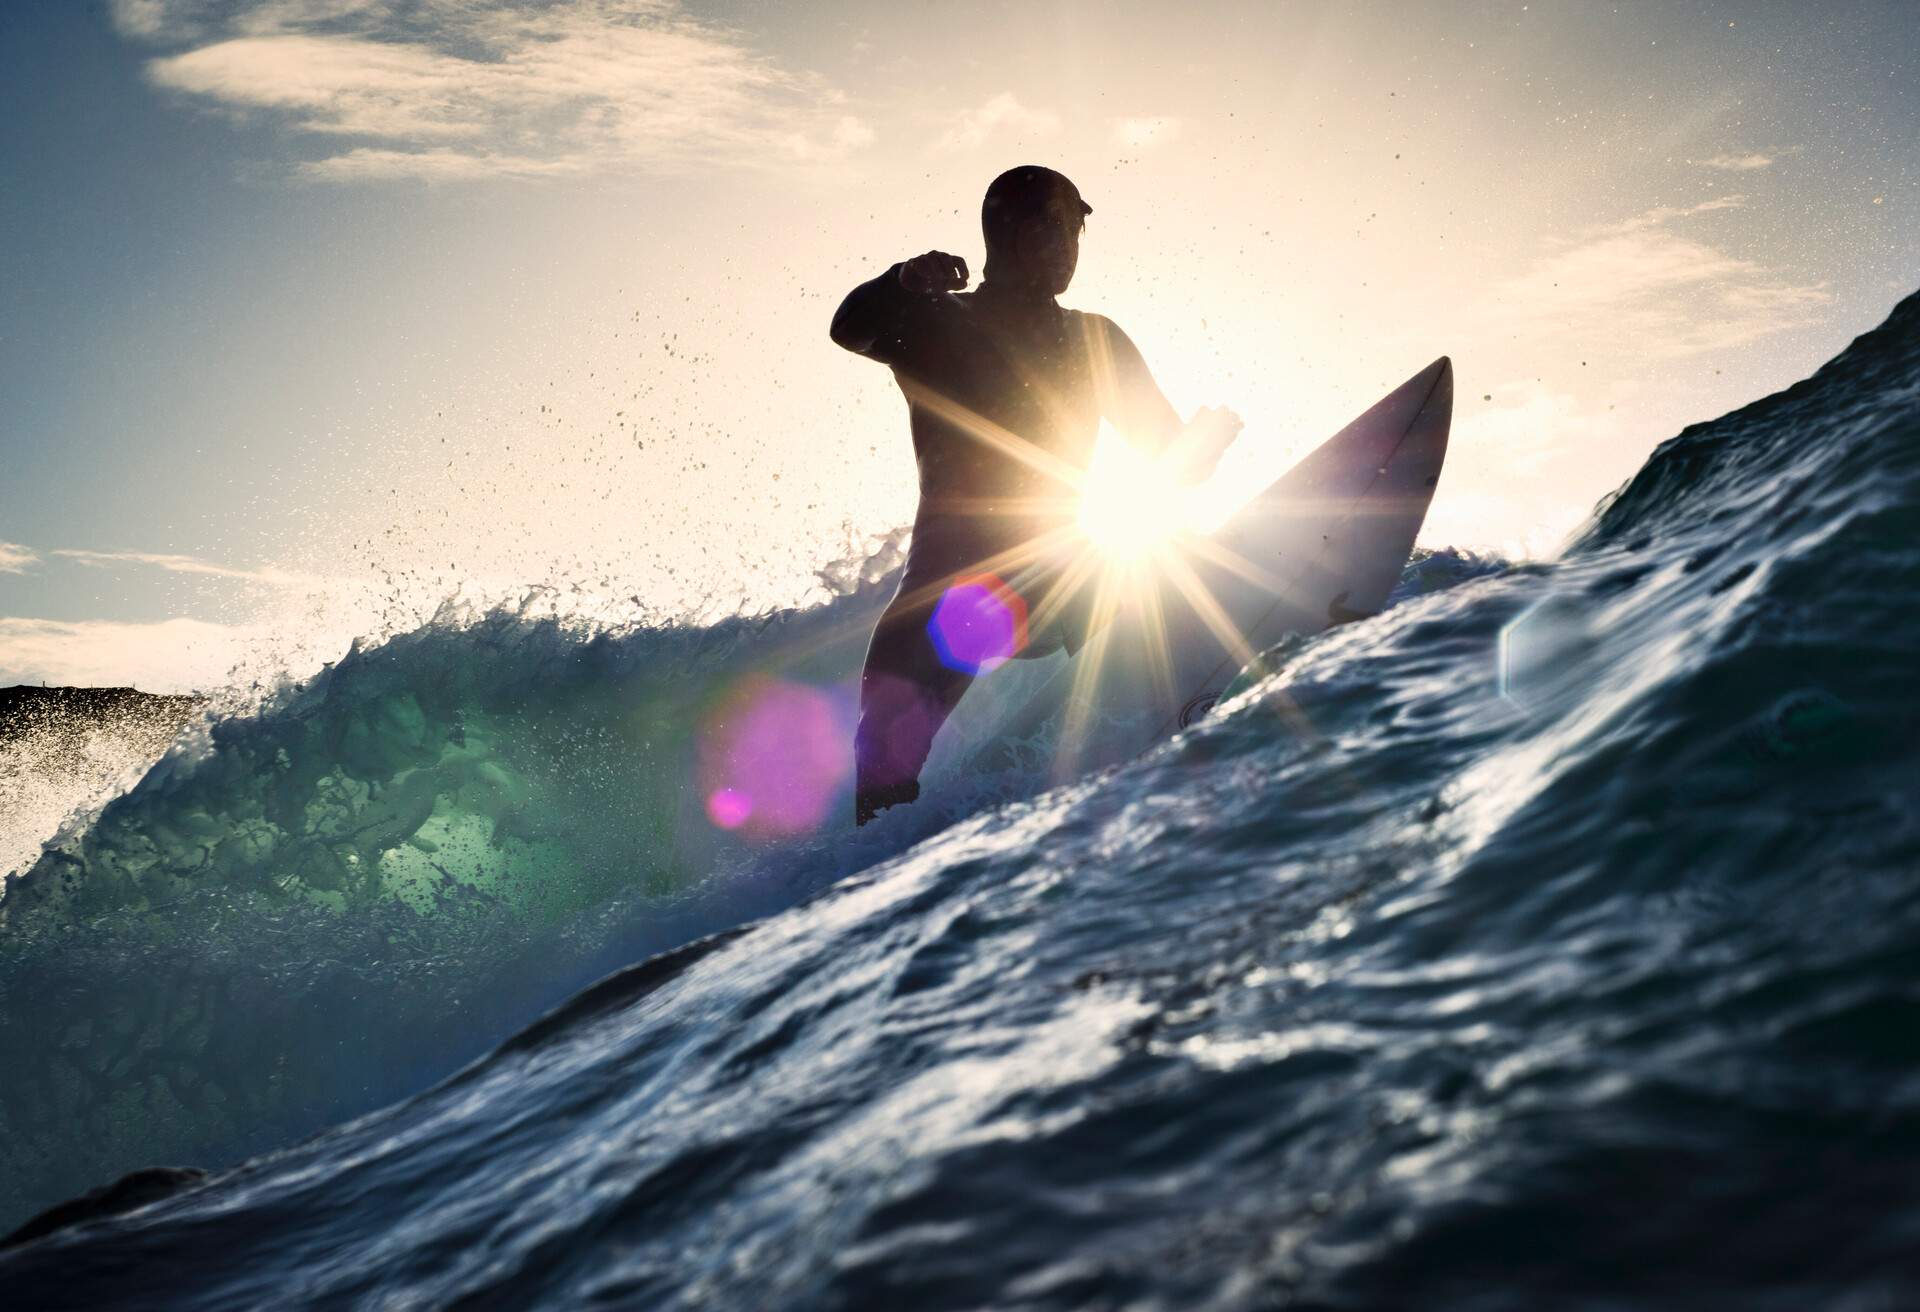 MAN_SURFER_SEA_SURFBOARD_WAVES